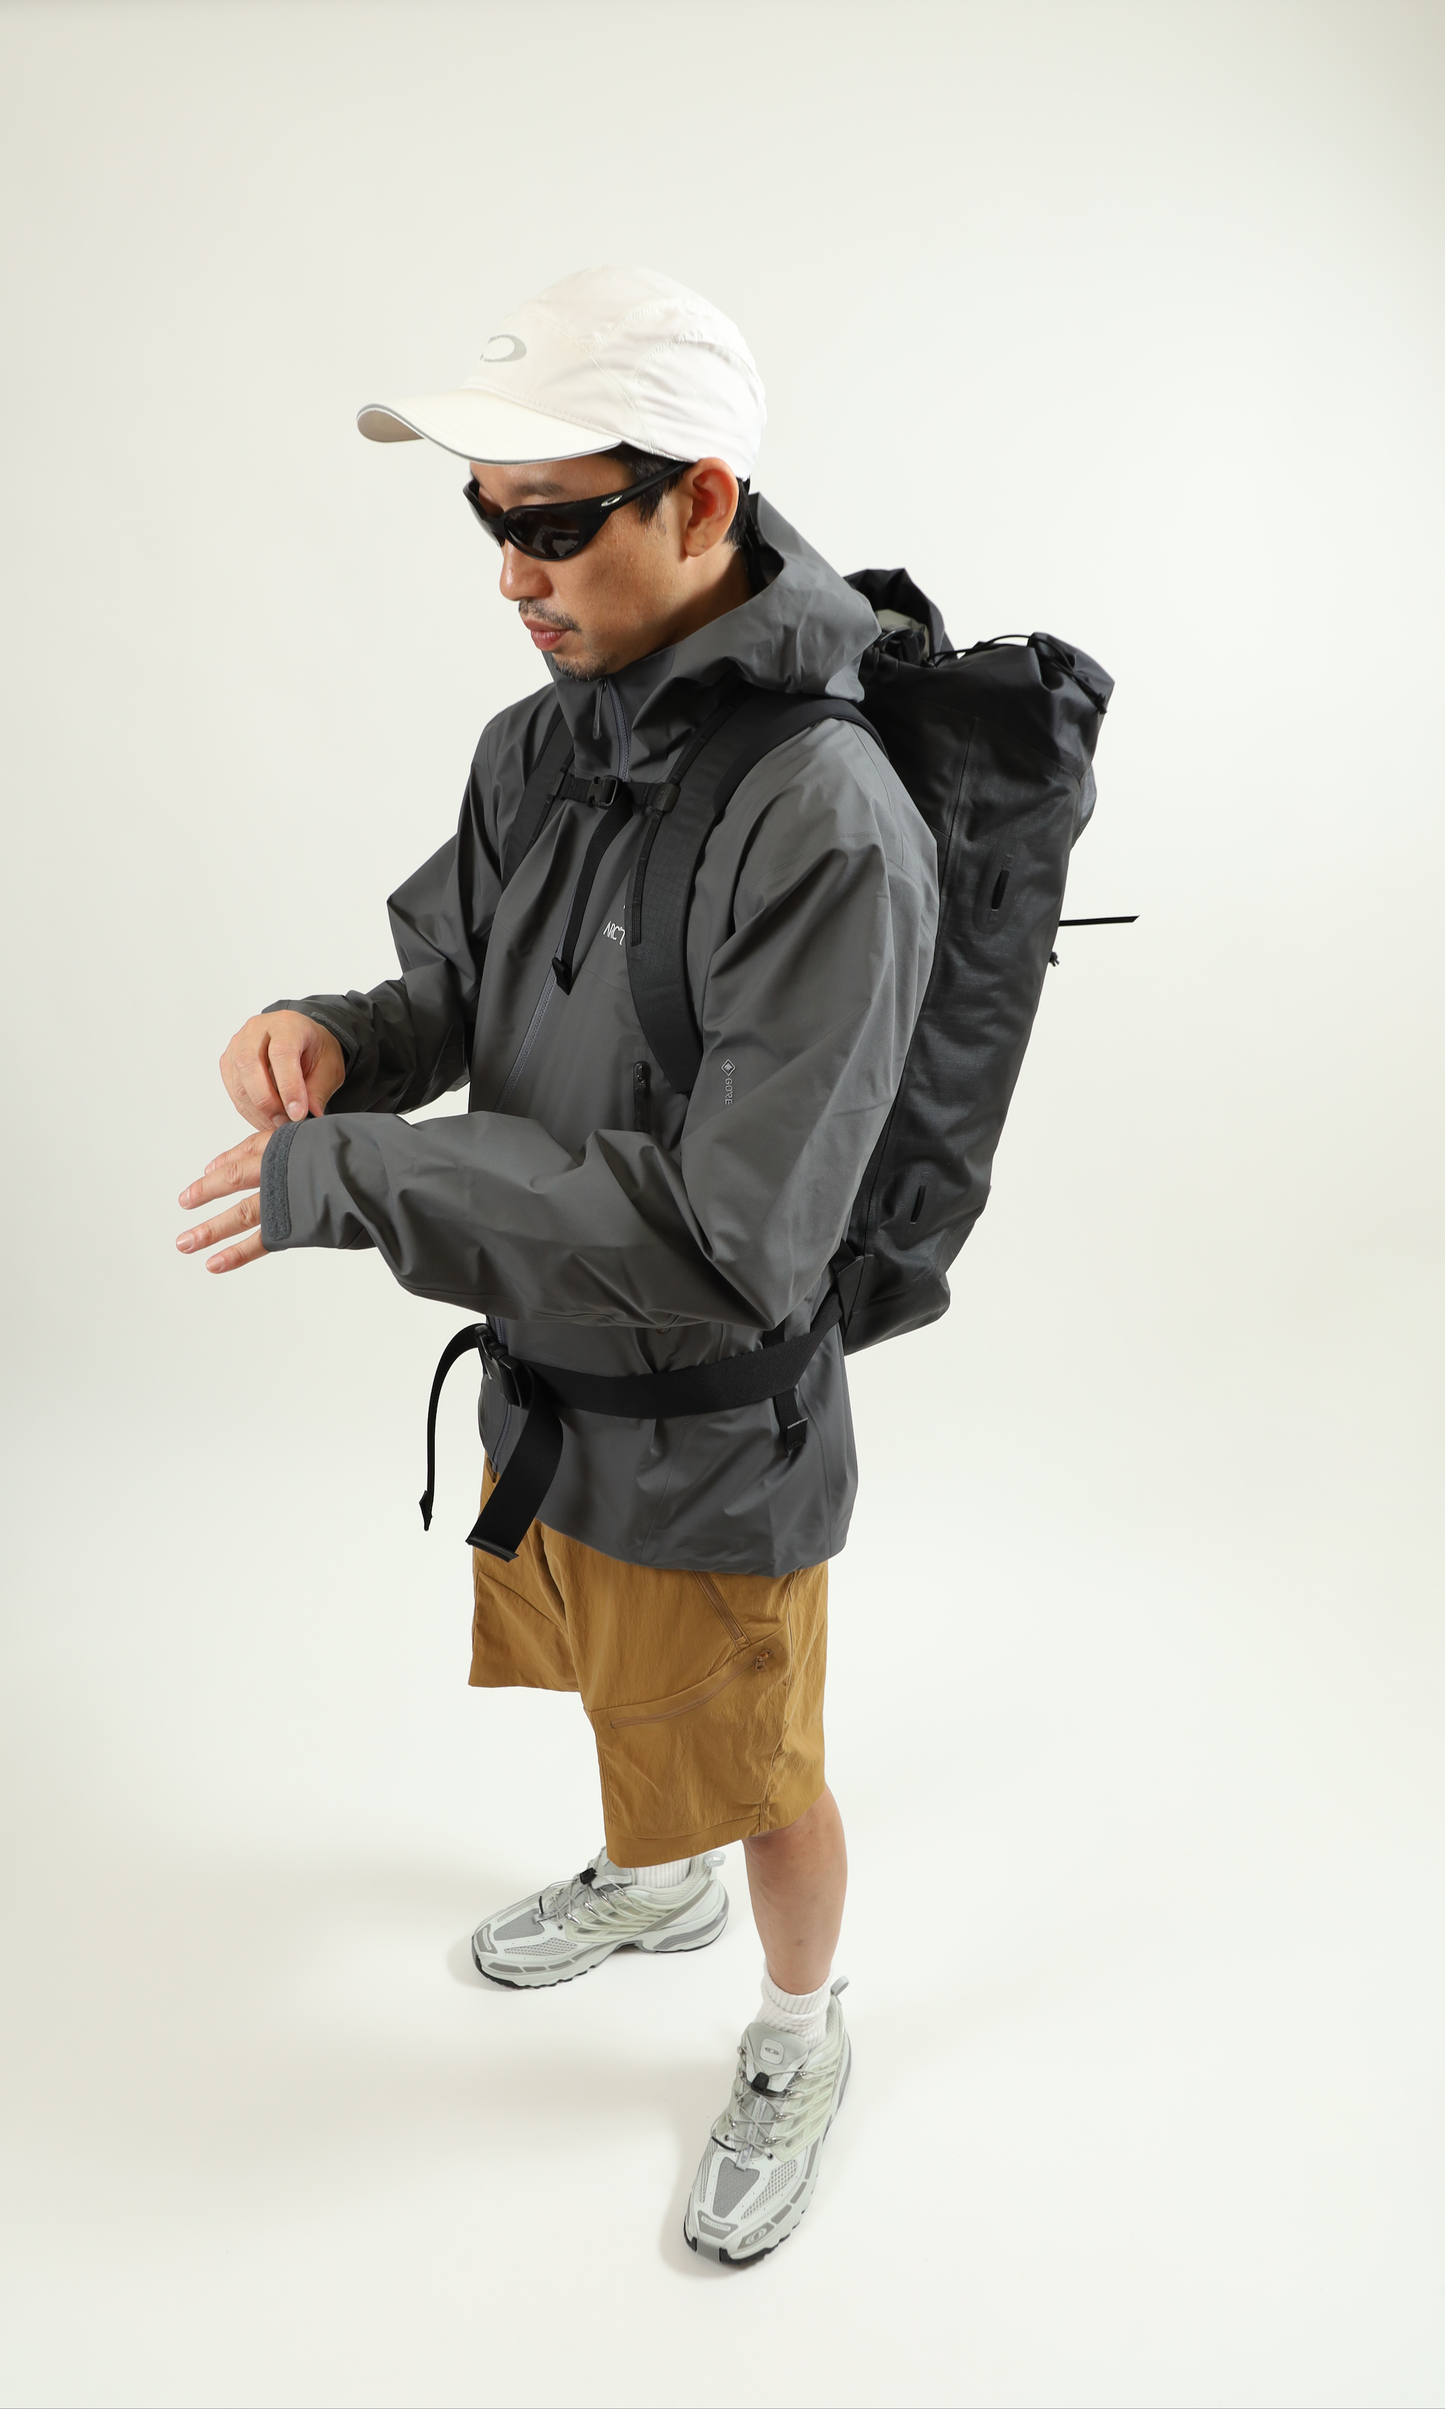 【Arc'teryx】Alpha FL 30 Backpack